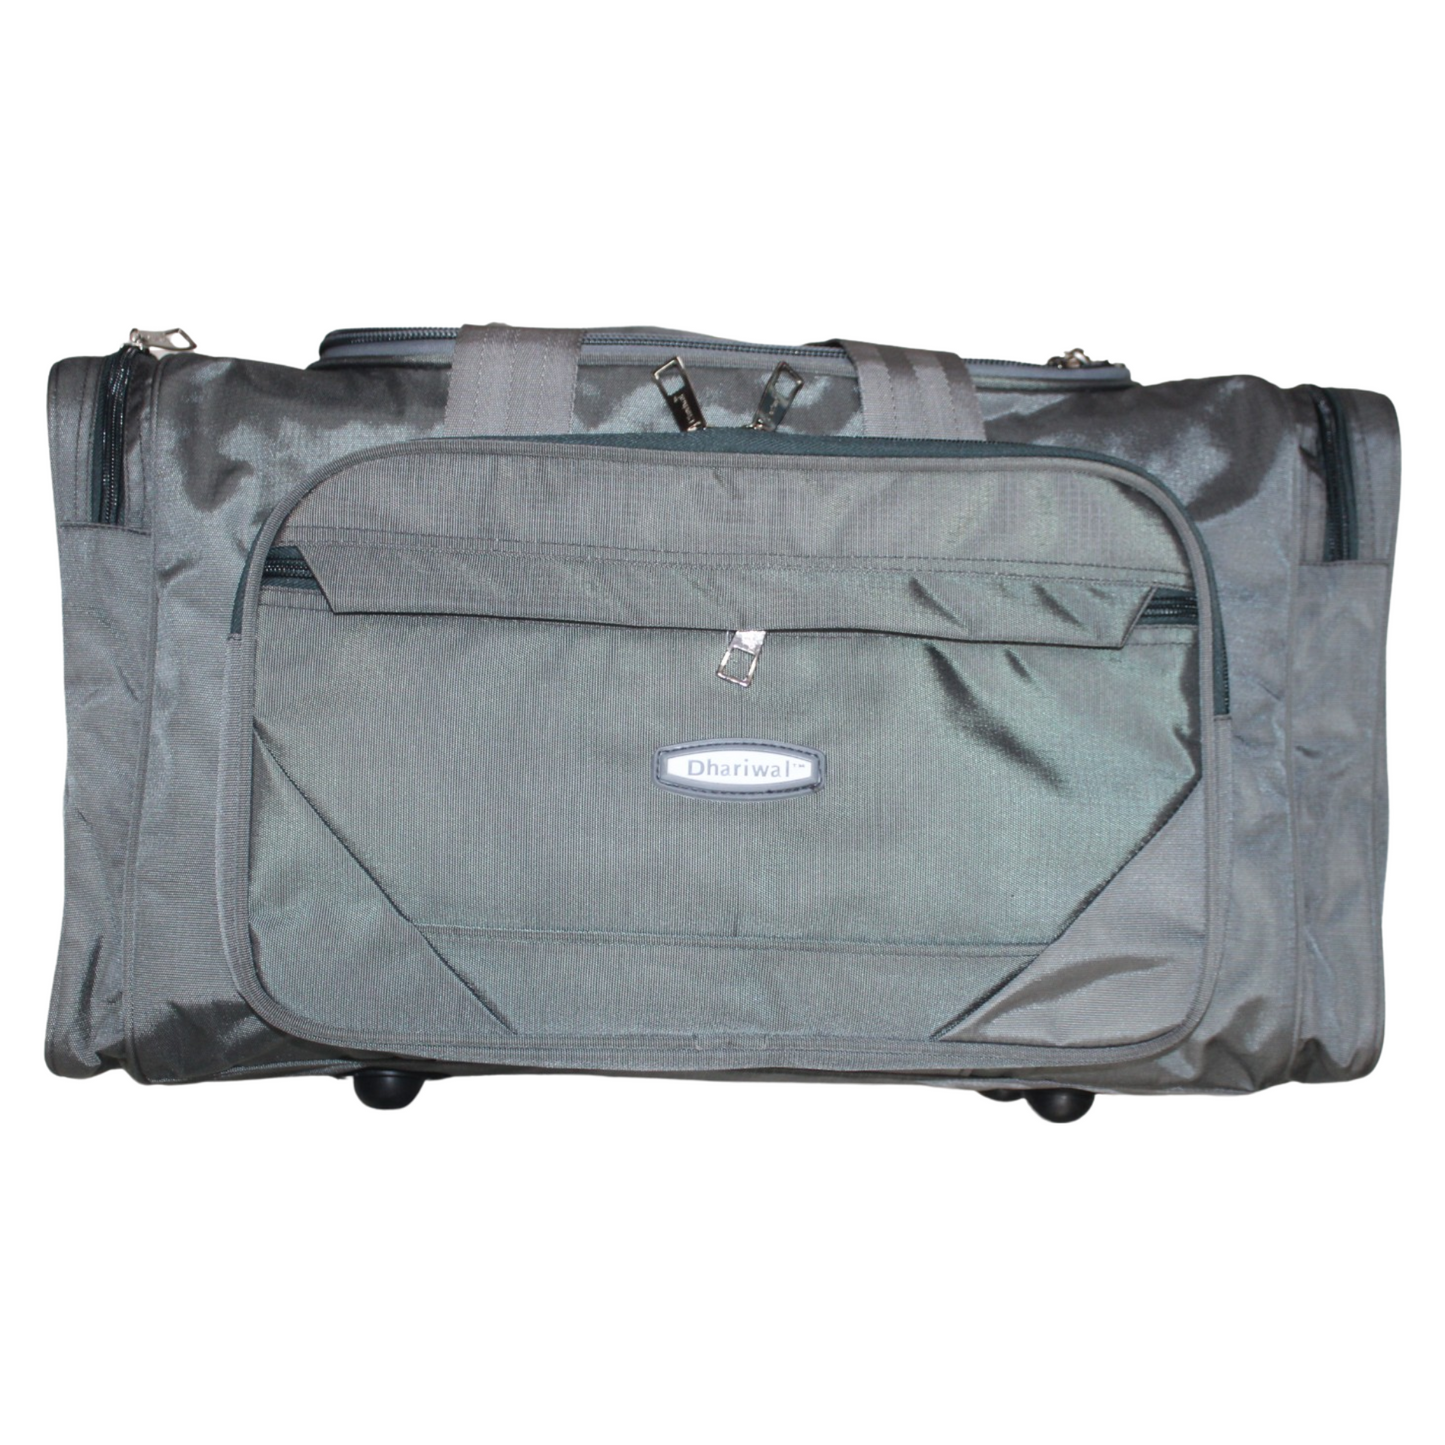 यात्रा बैग TRB-510